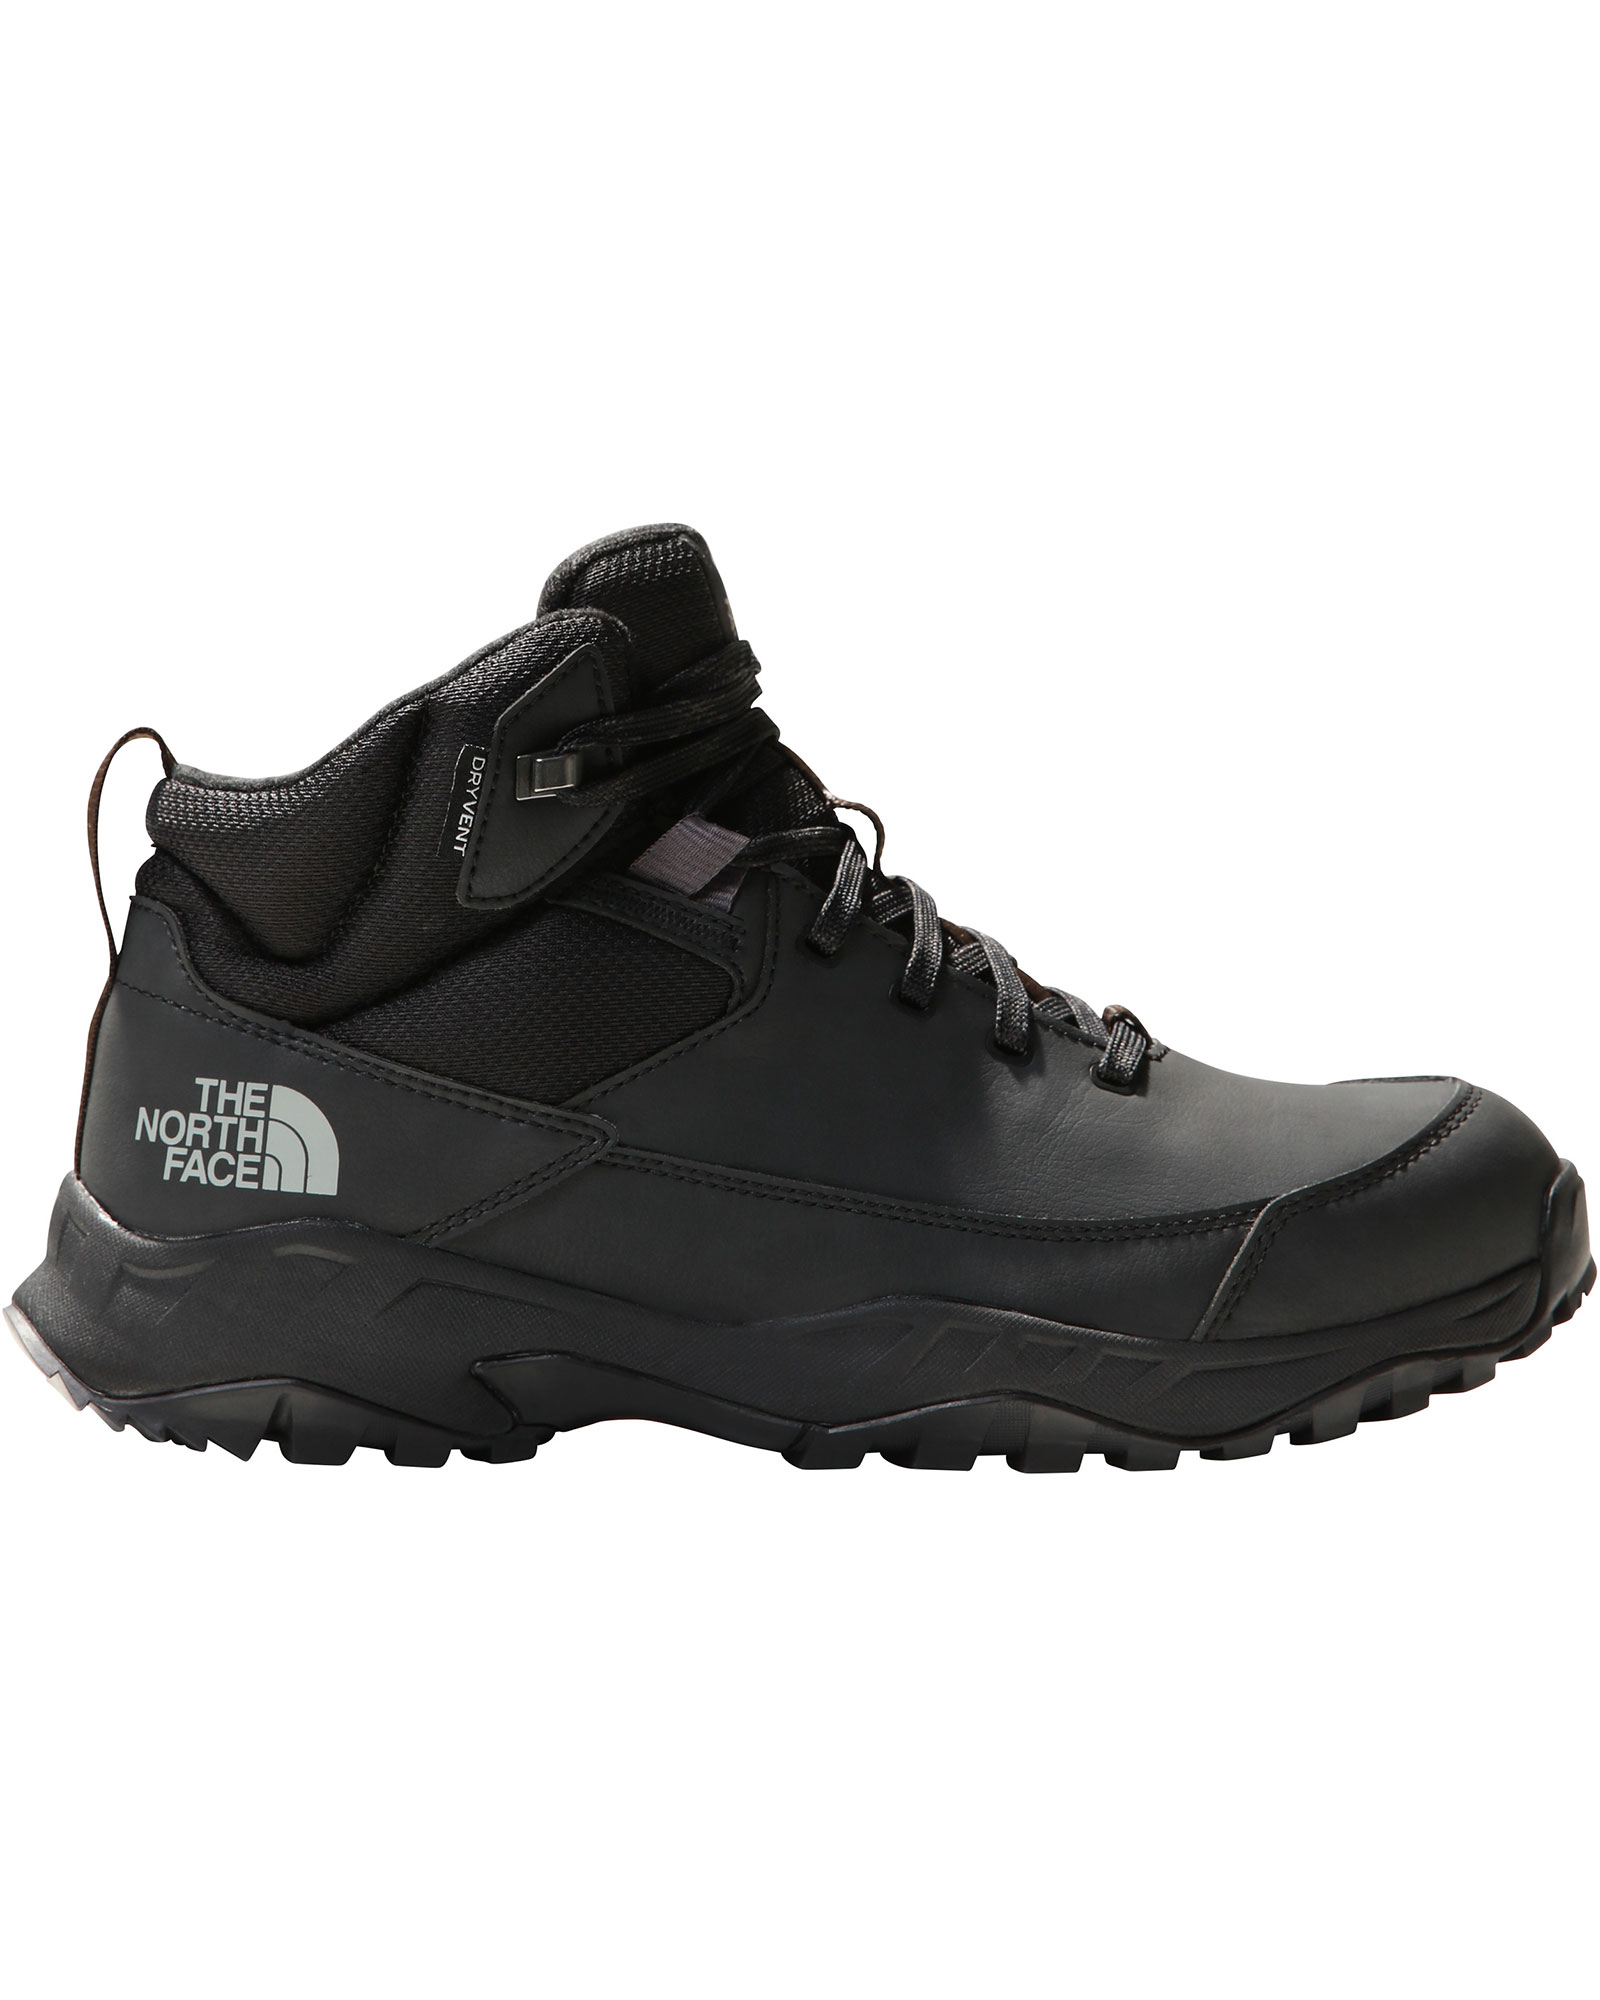 The North Face Storm Strike III Waterproof Men’s Boots - TNF Black/Asphalt Grey UK 12